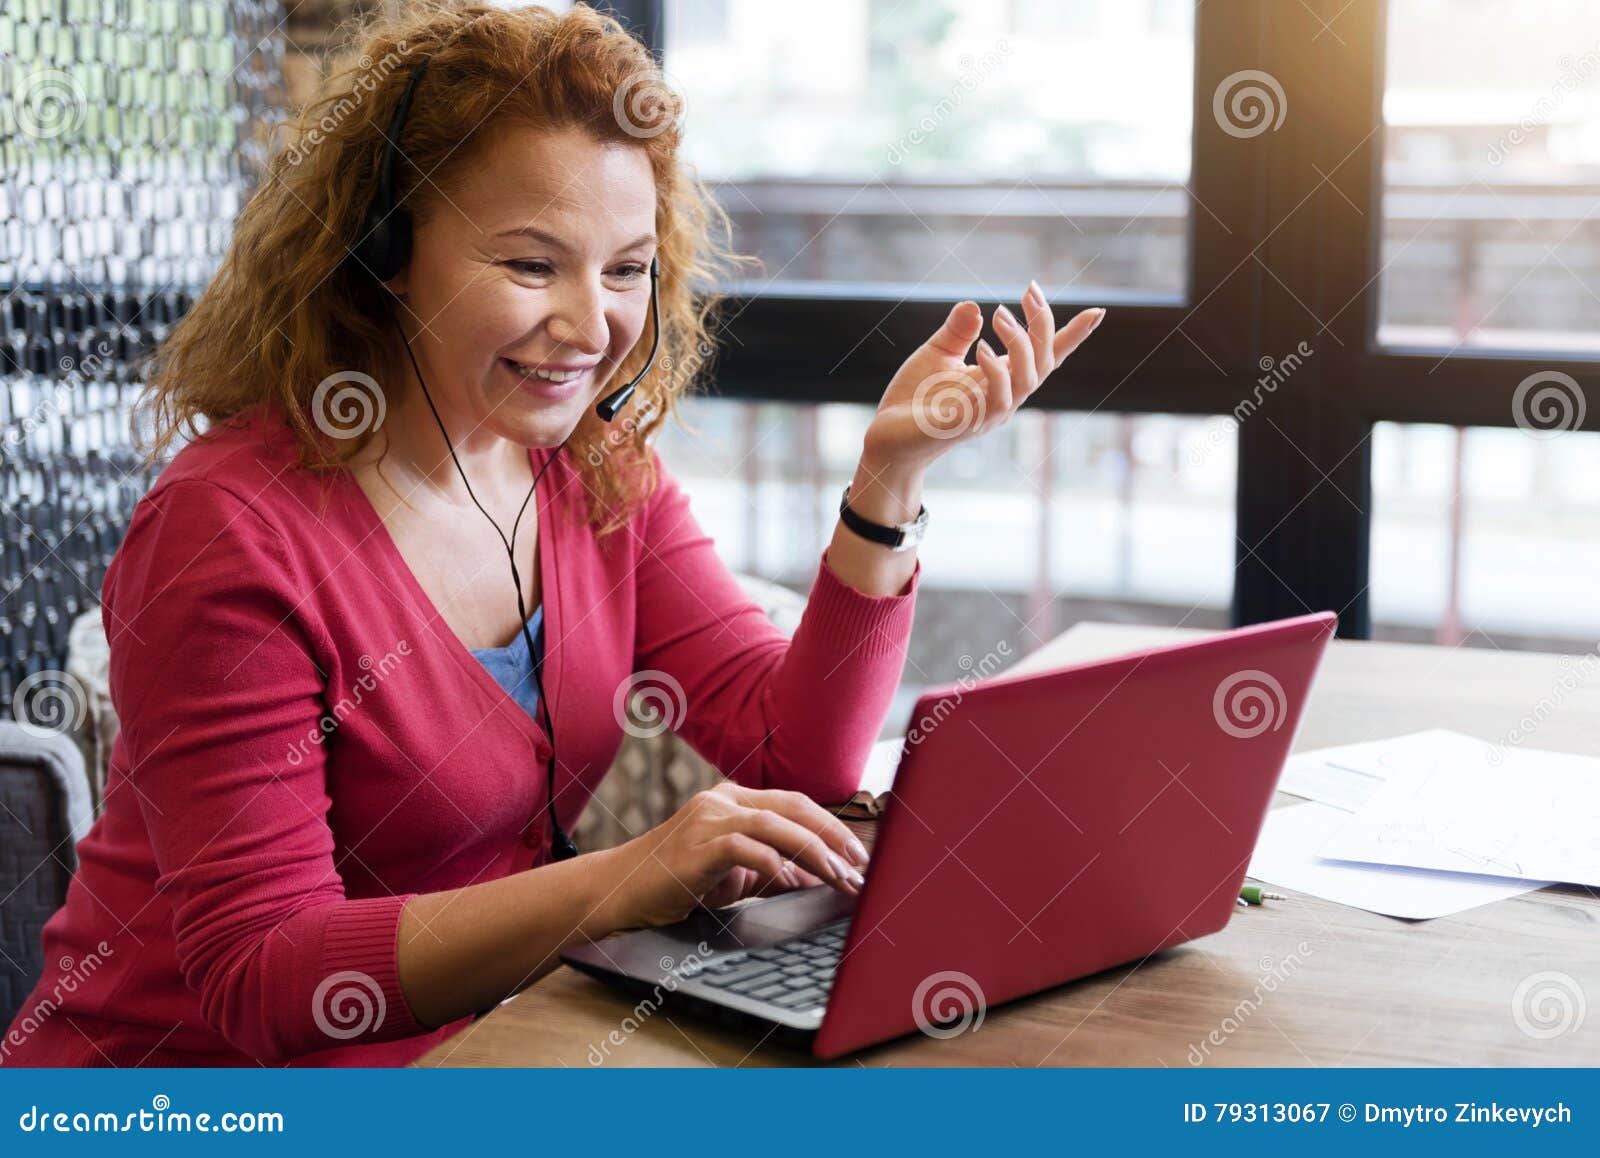 smiling ginger woman talking per skype